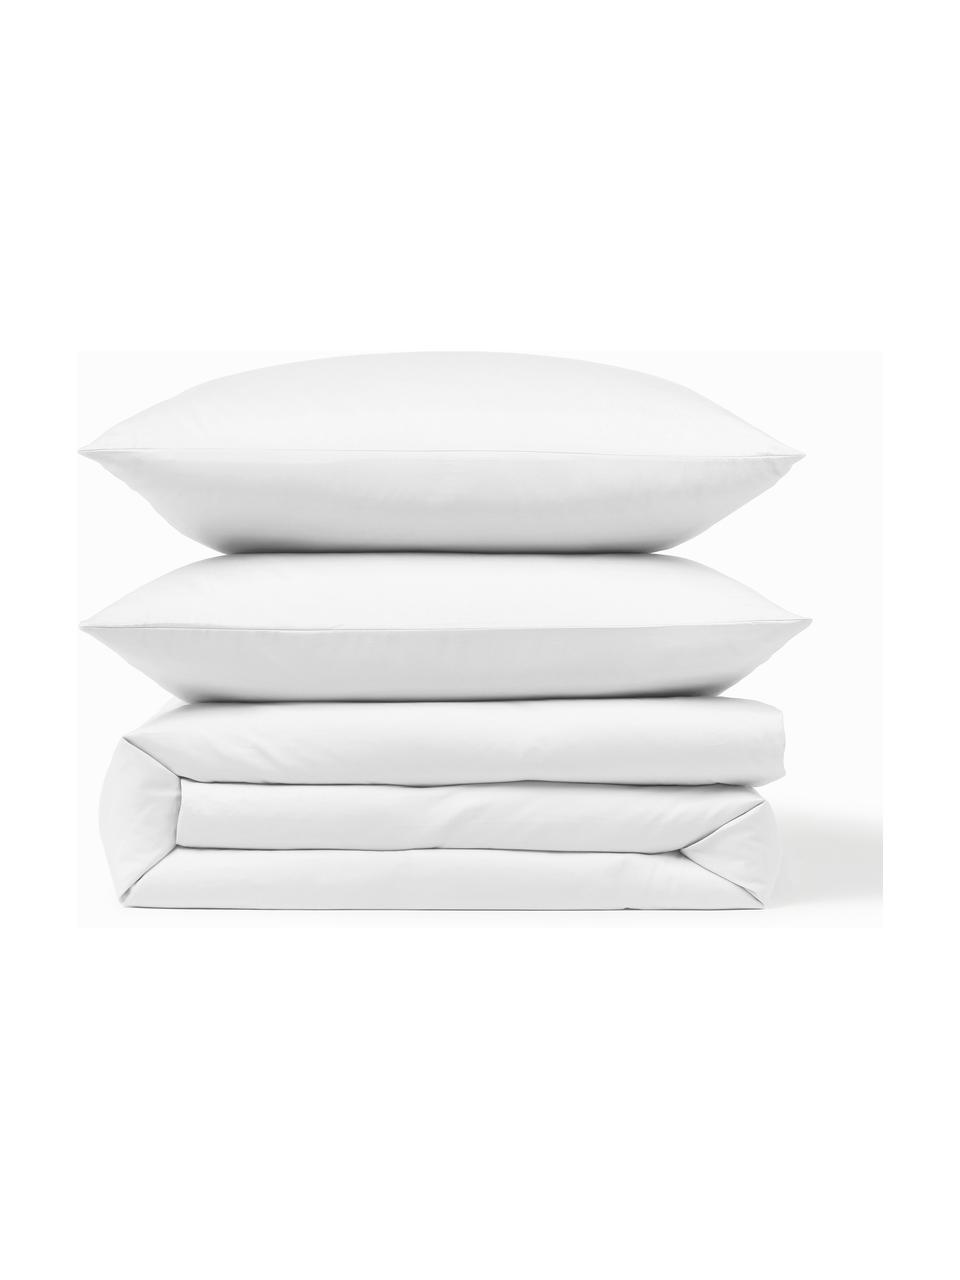 Baumwollsatin-Bettdeckenbezug Comfort, Webart: Satin Fadendichte 250 TC,, Weiß, B 200 x L 200 cm